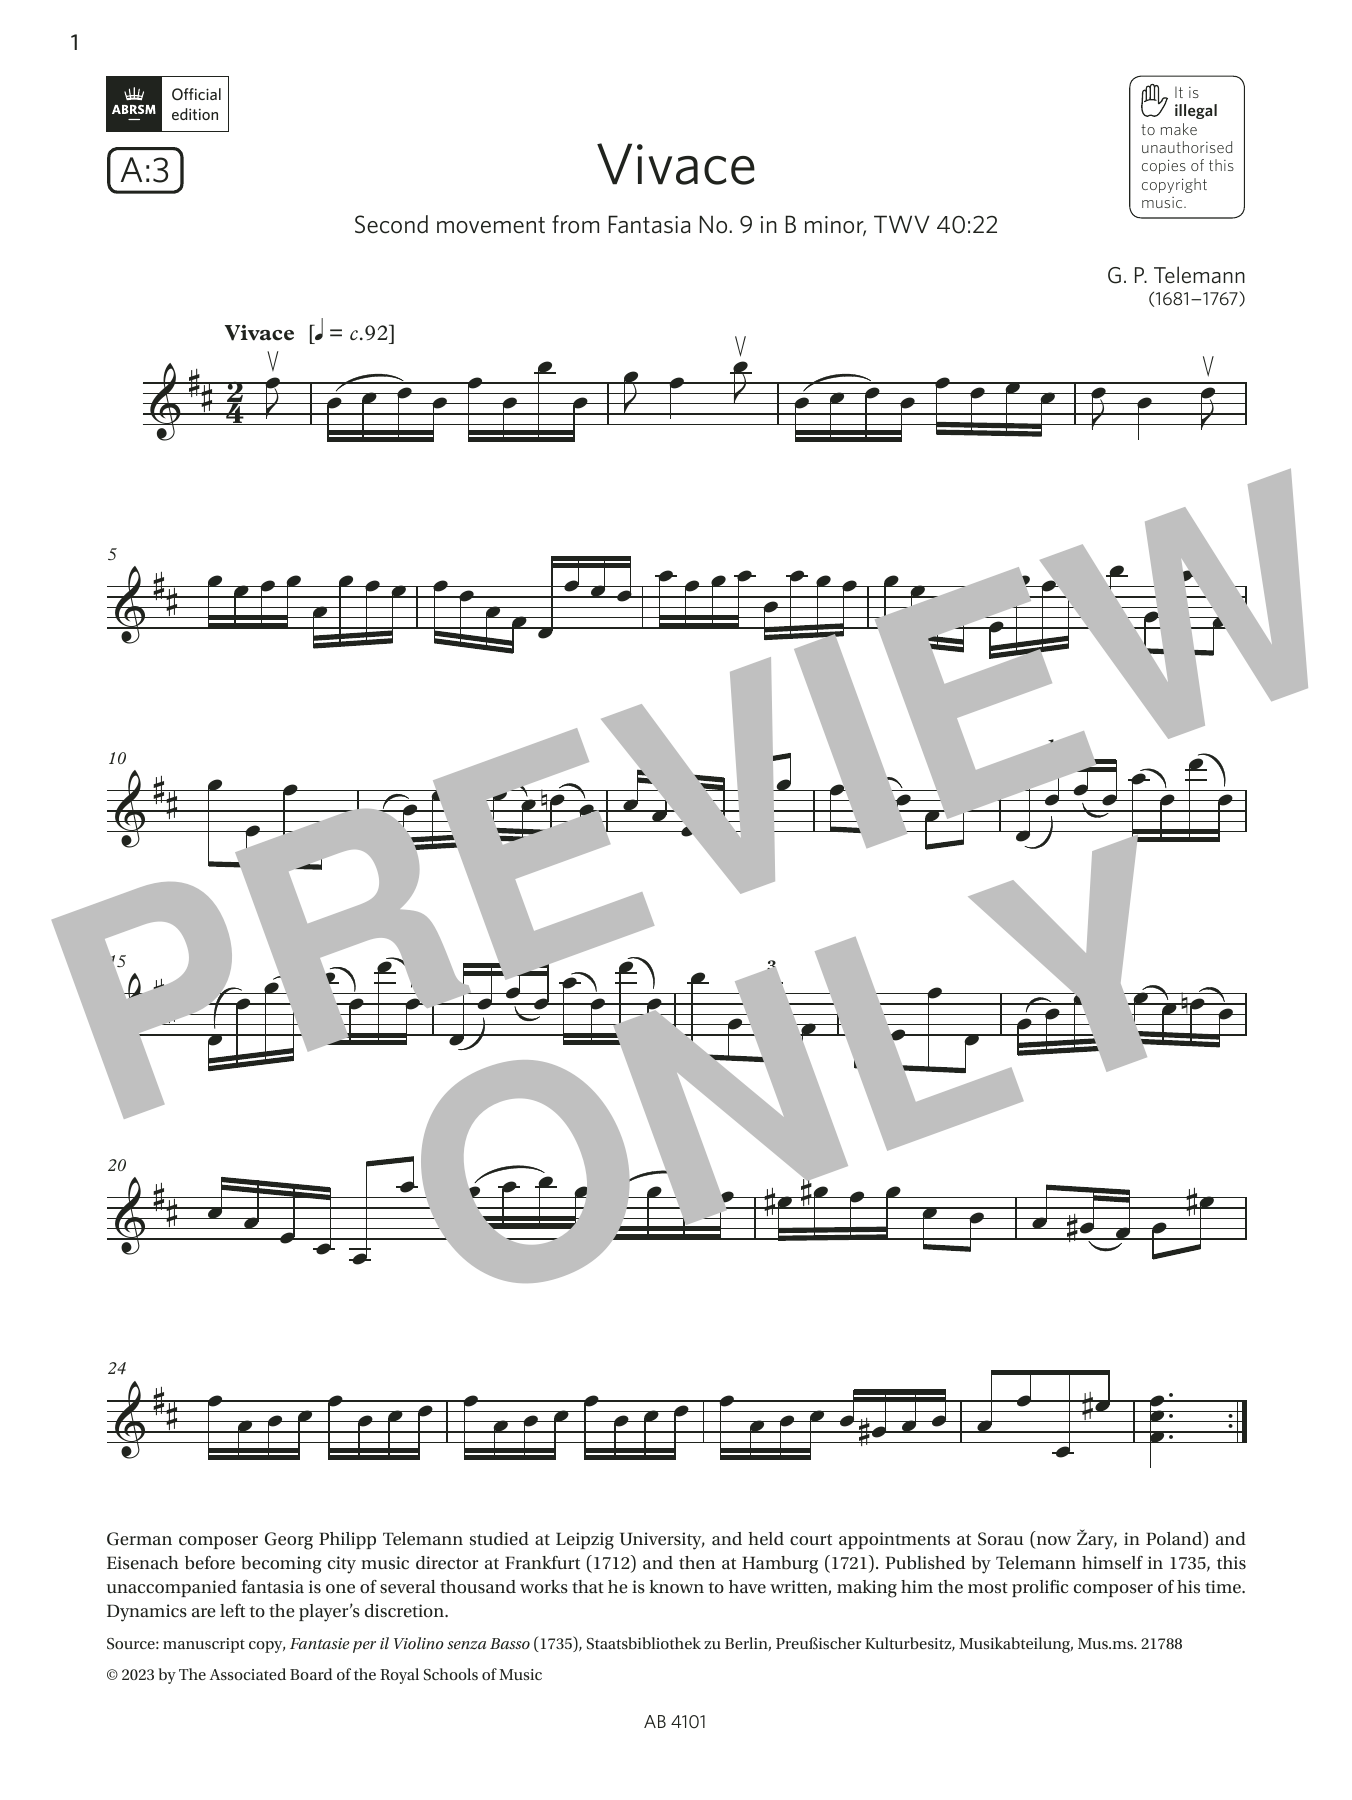 Download G. P. Telemann Vivace (Grade 7, A3, from the ABRSM Vio Sheet Music